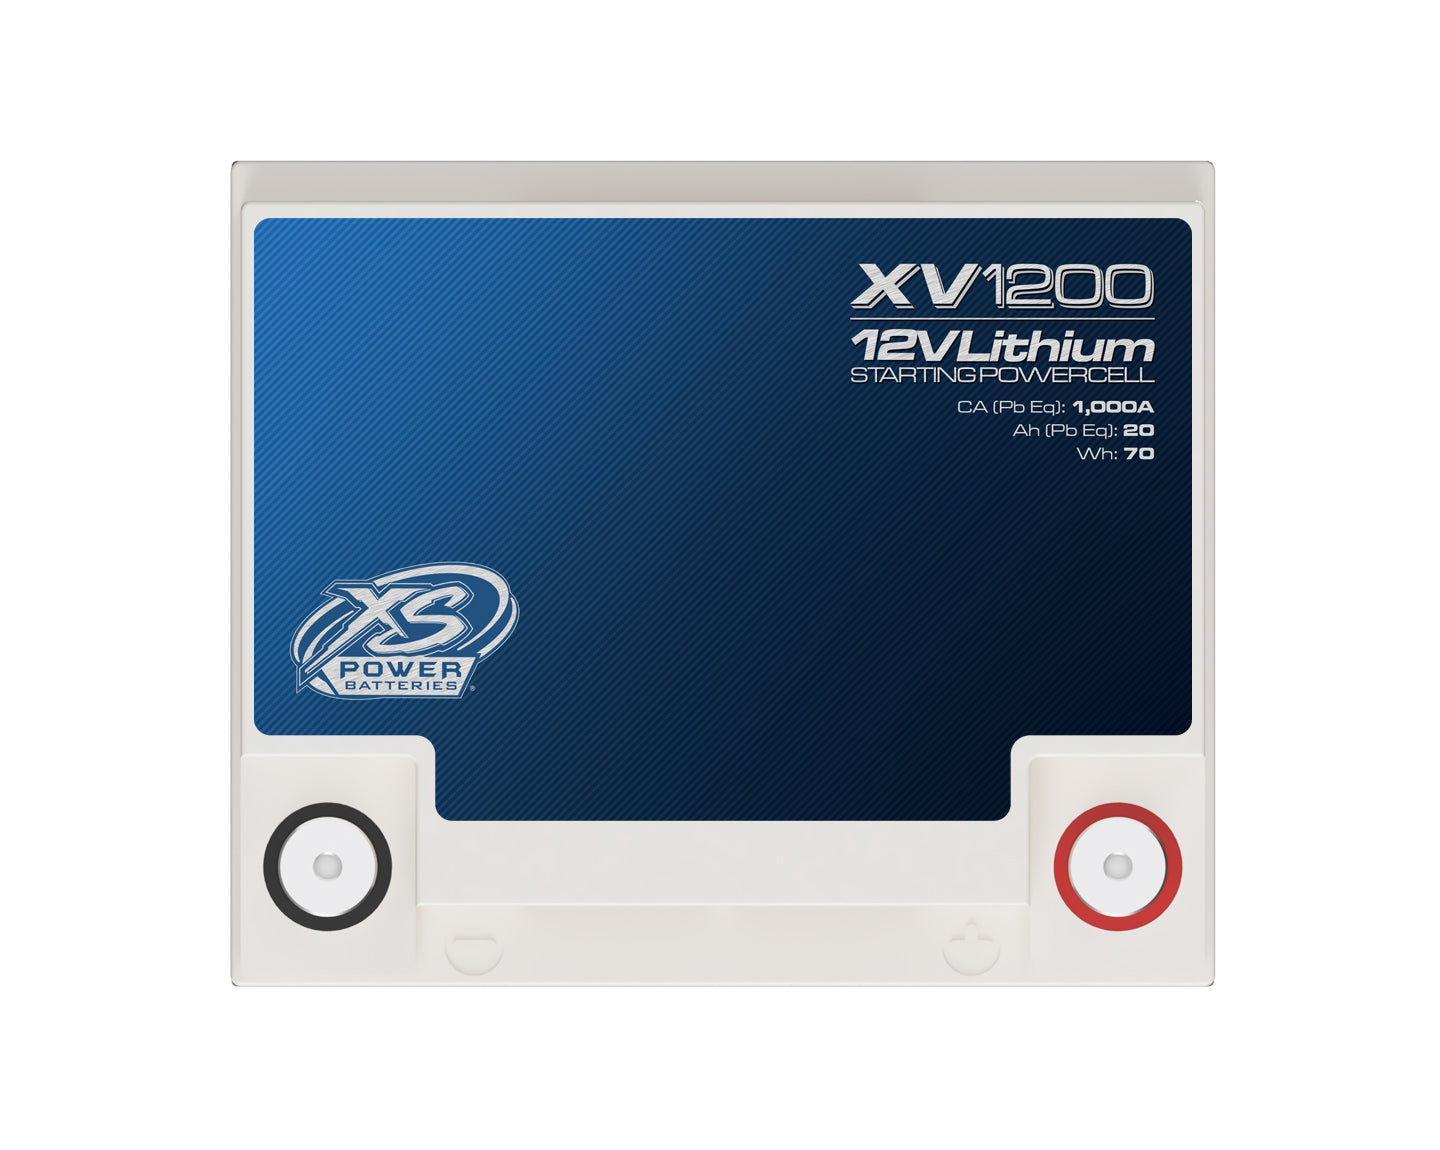 XV1200 XS Power 12VDC Lithium LTO Underhood-Safe Vehicle Battery 1500W 70Wh